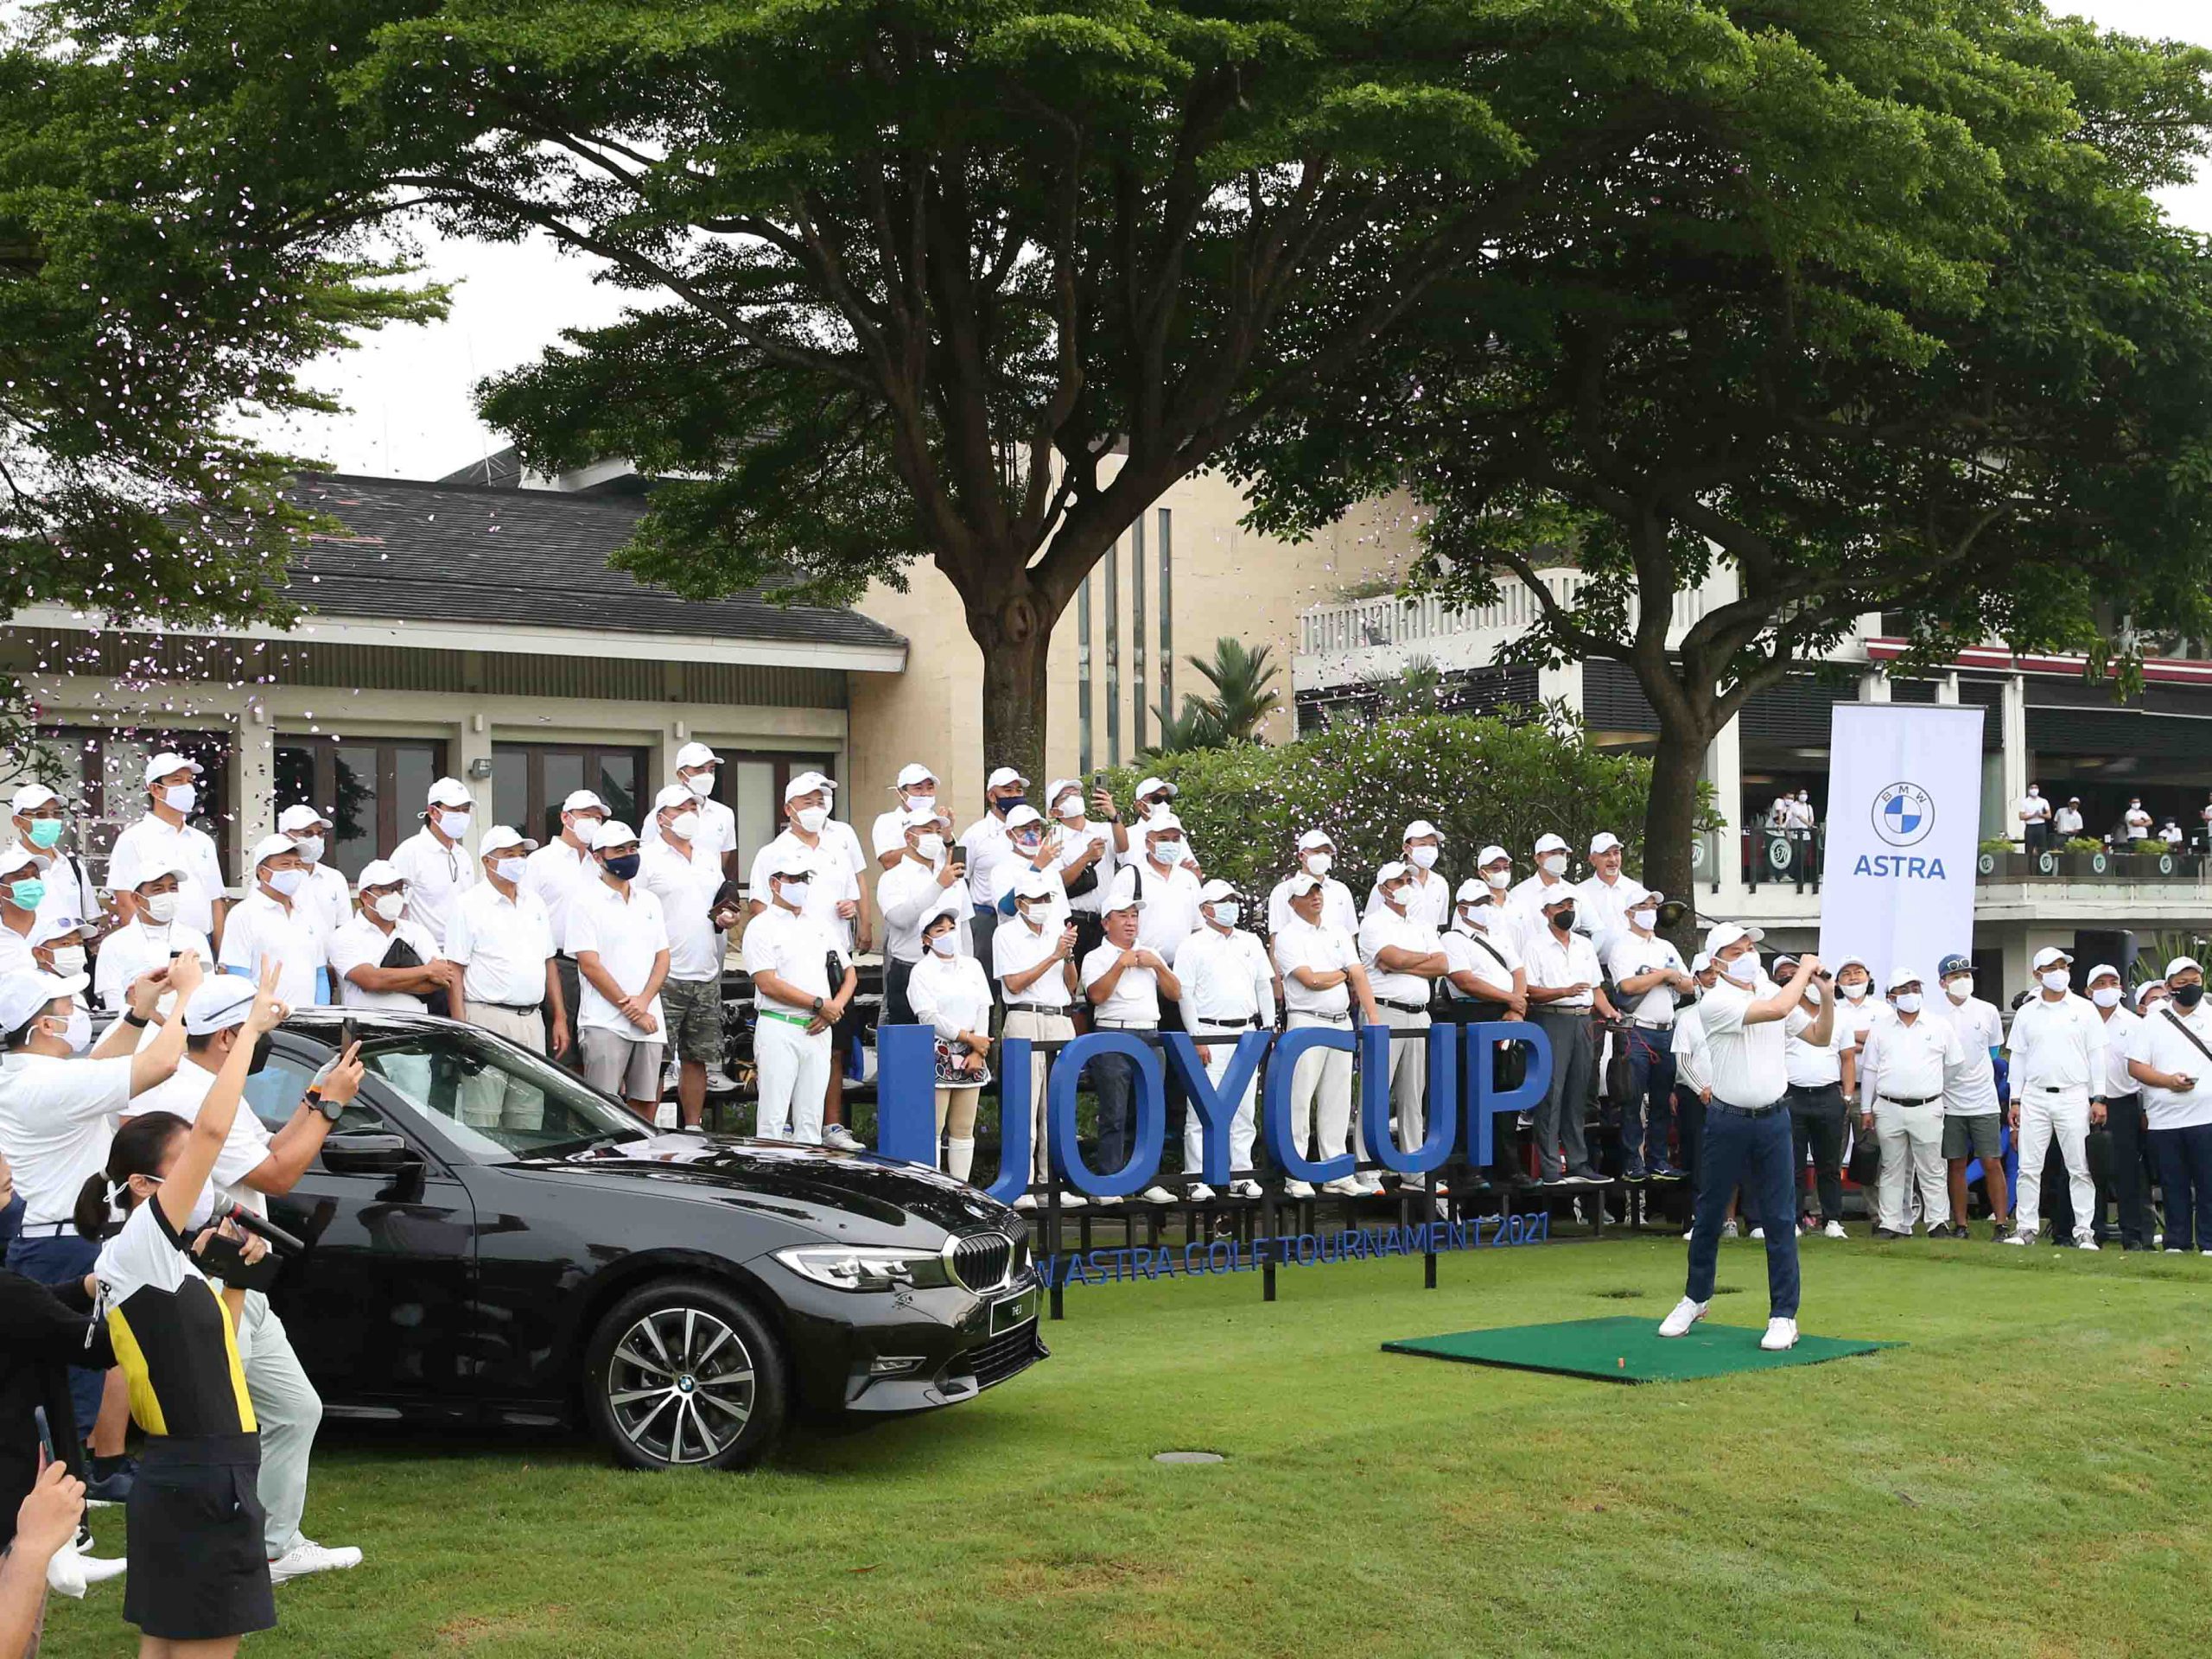 Pertama Kali BMW Astra Gelar JoyCup Golf Tournament 2021